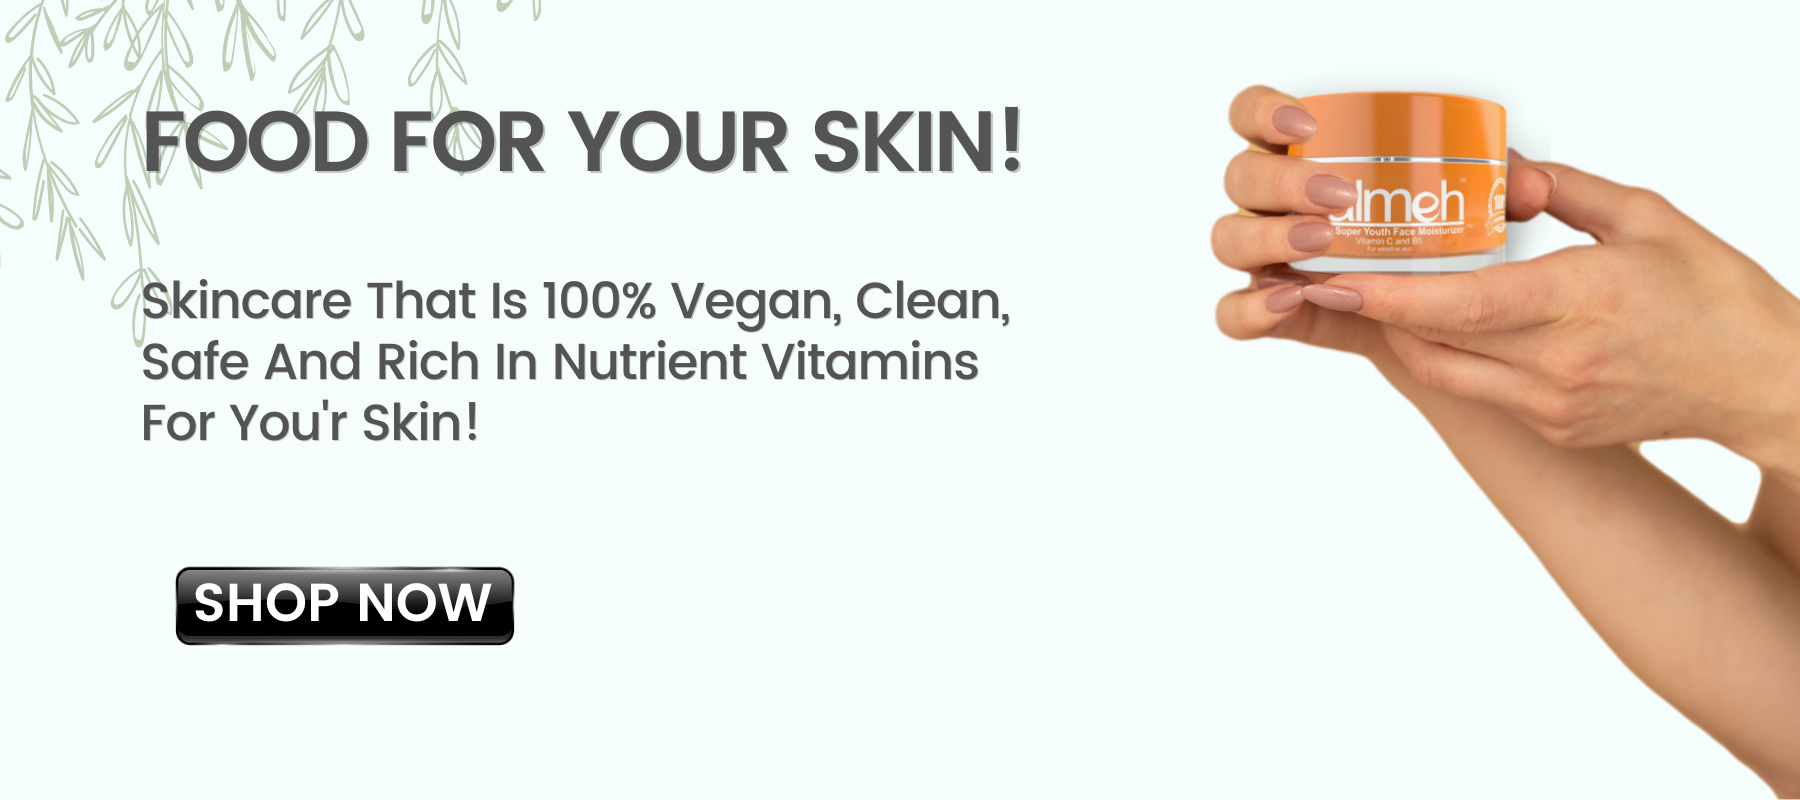 food skin, clean skincare, vegan, cold pressed, cruelty free skincare